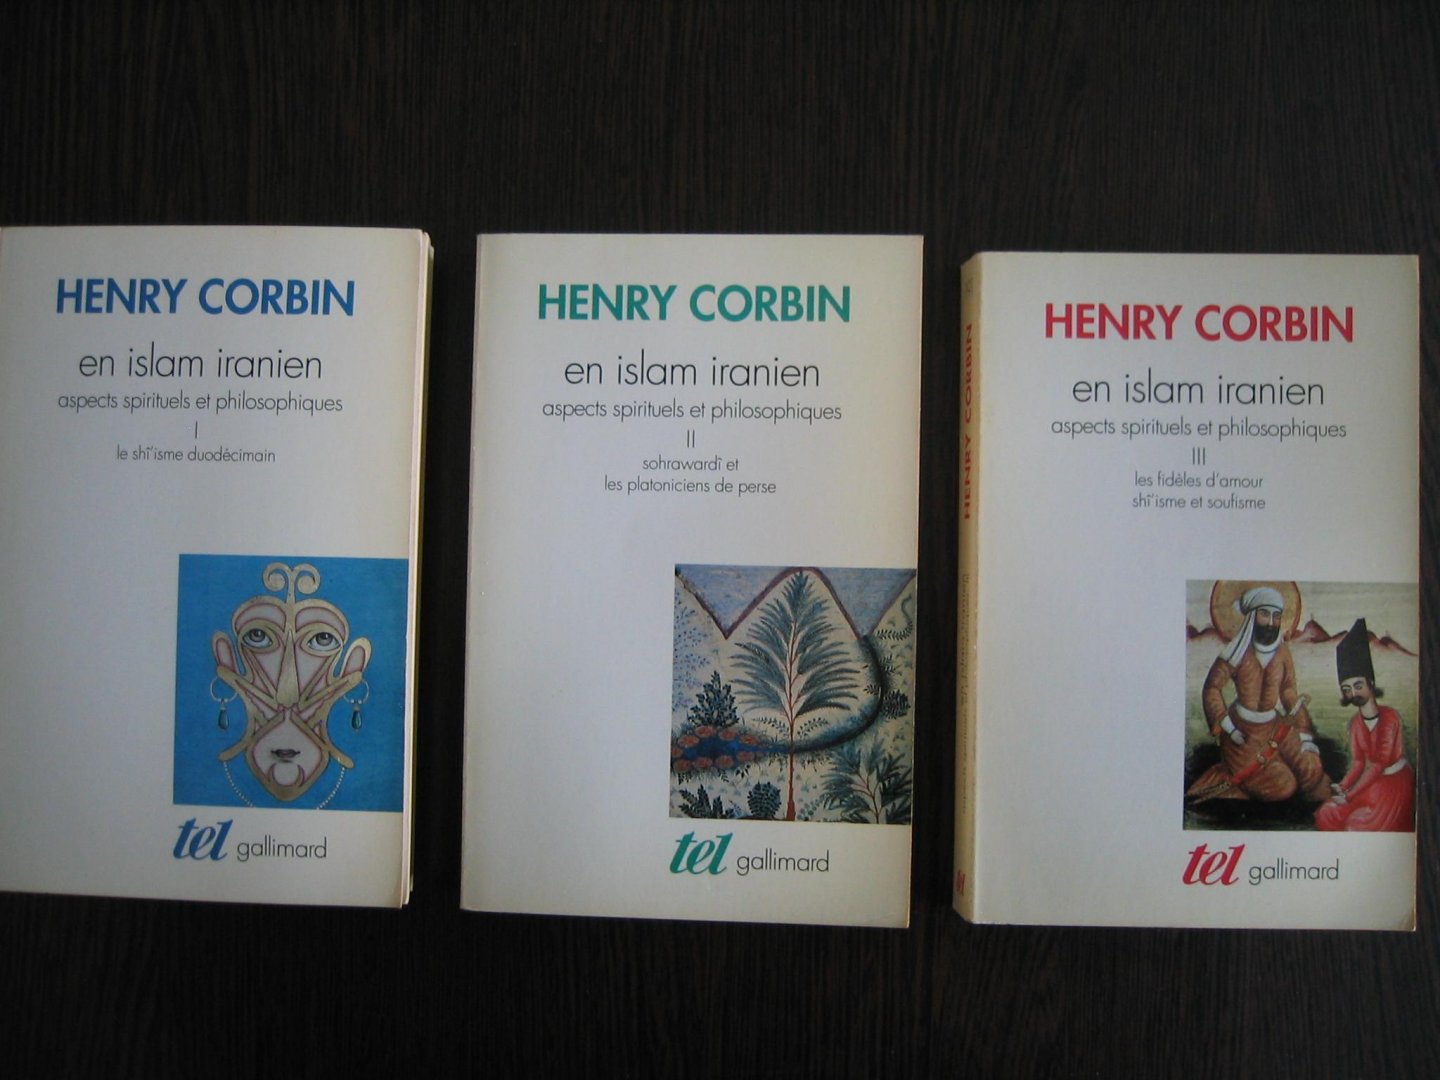 Corbin, Henry - Henry Corbin en Islam iranien aspects spirituels et philosophiques - vier delen